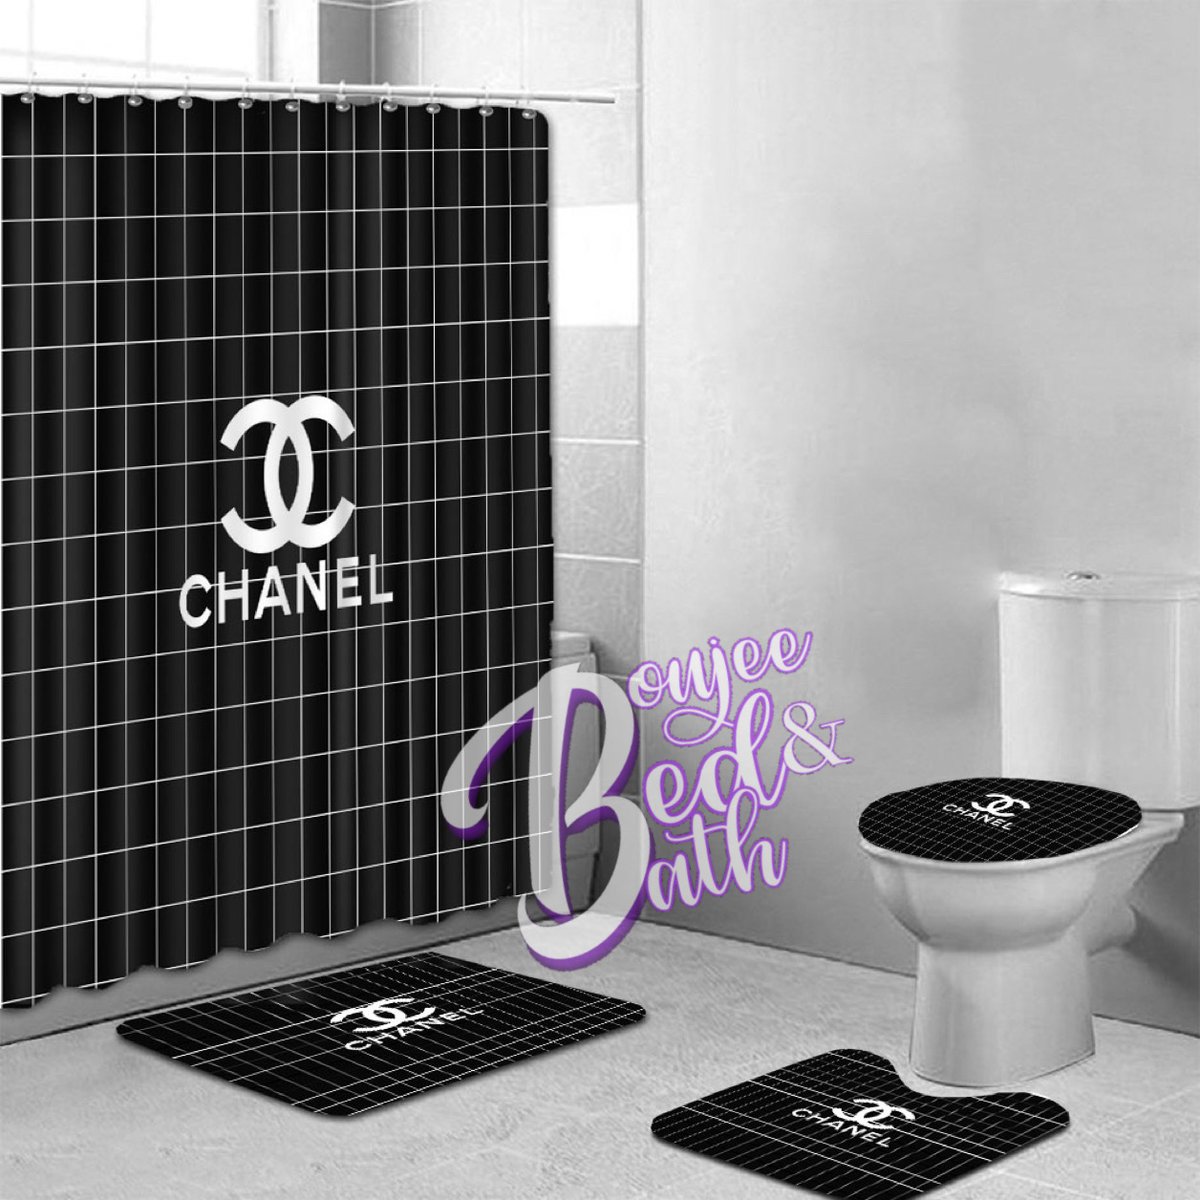 Chanel bathroom - bathroom set style 1